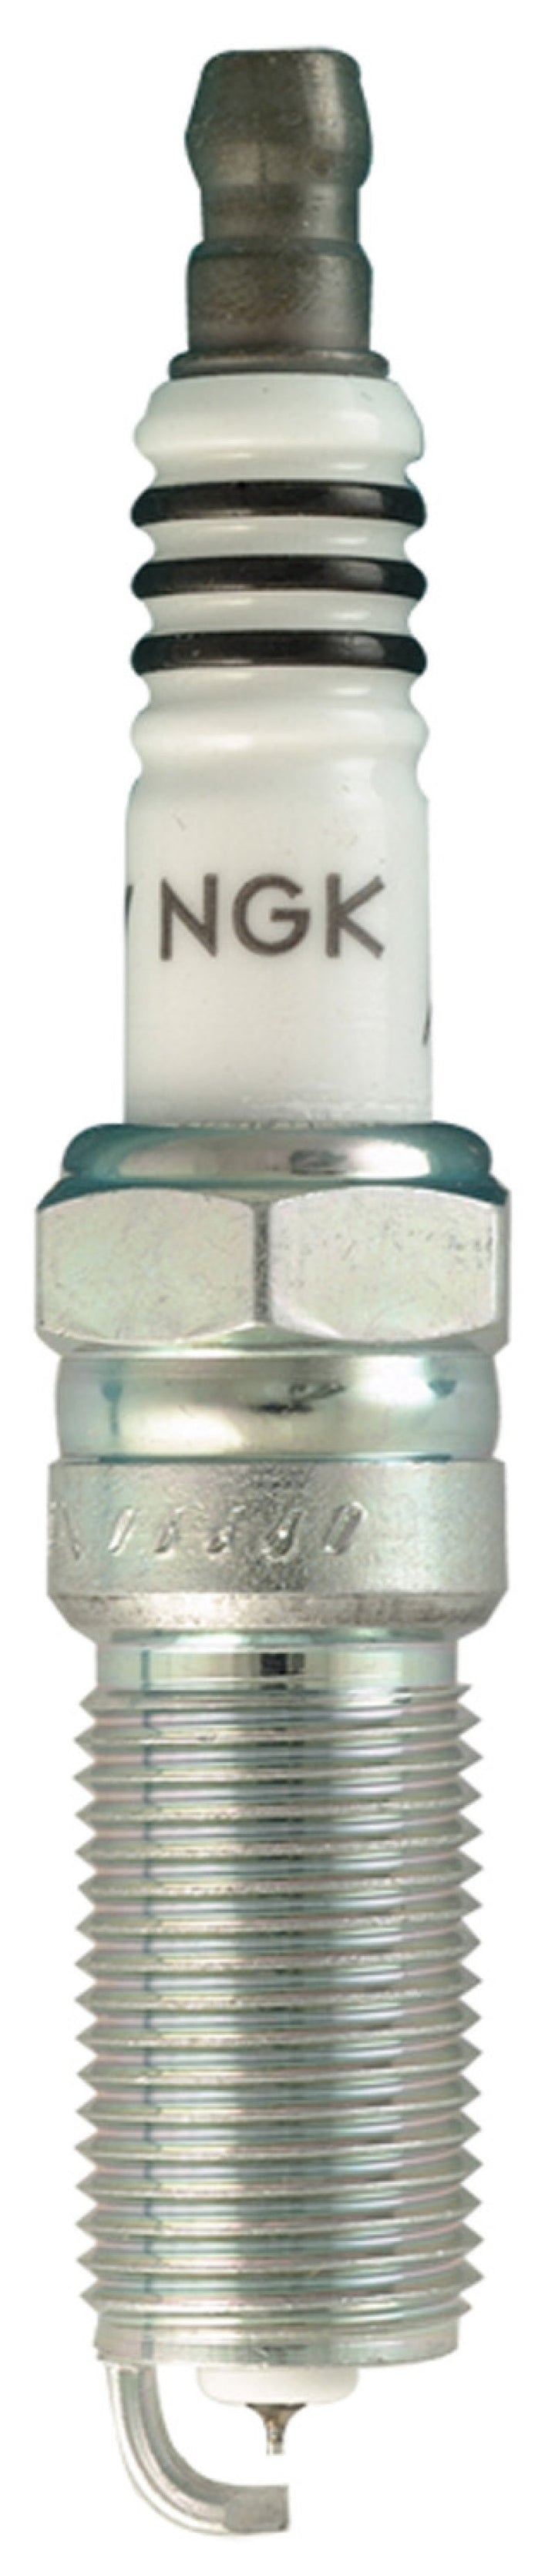 NGK Iridium IX Spark Plug Box of 4 (LTR6IX) - Premium Spark Plugs from NGK - Just 126.81 SR! Shop now at Motors